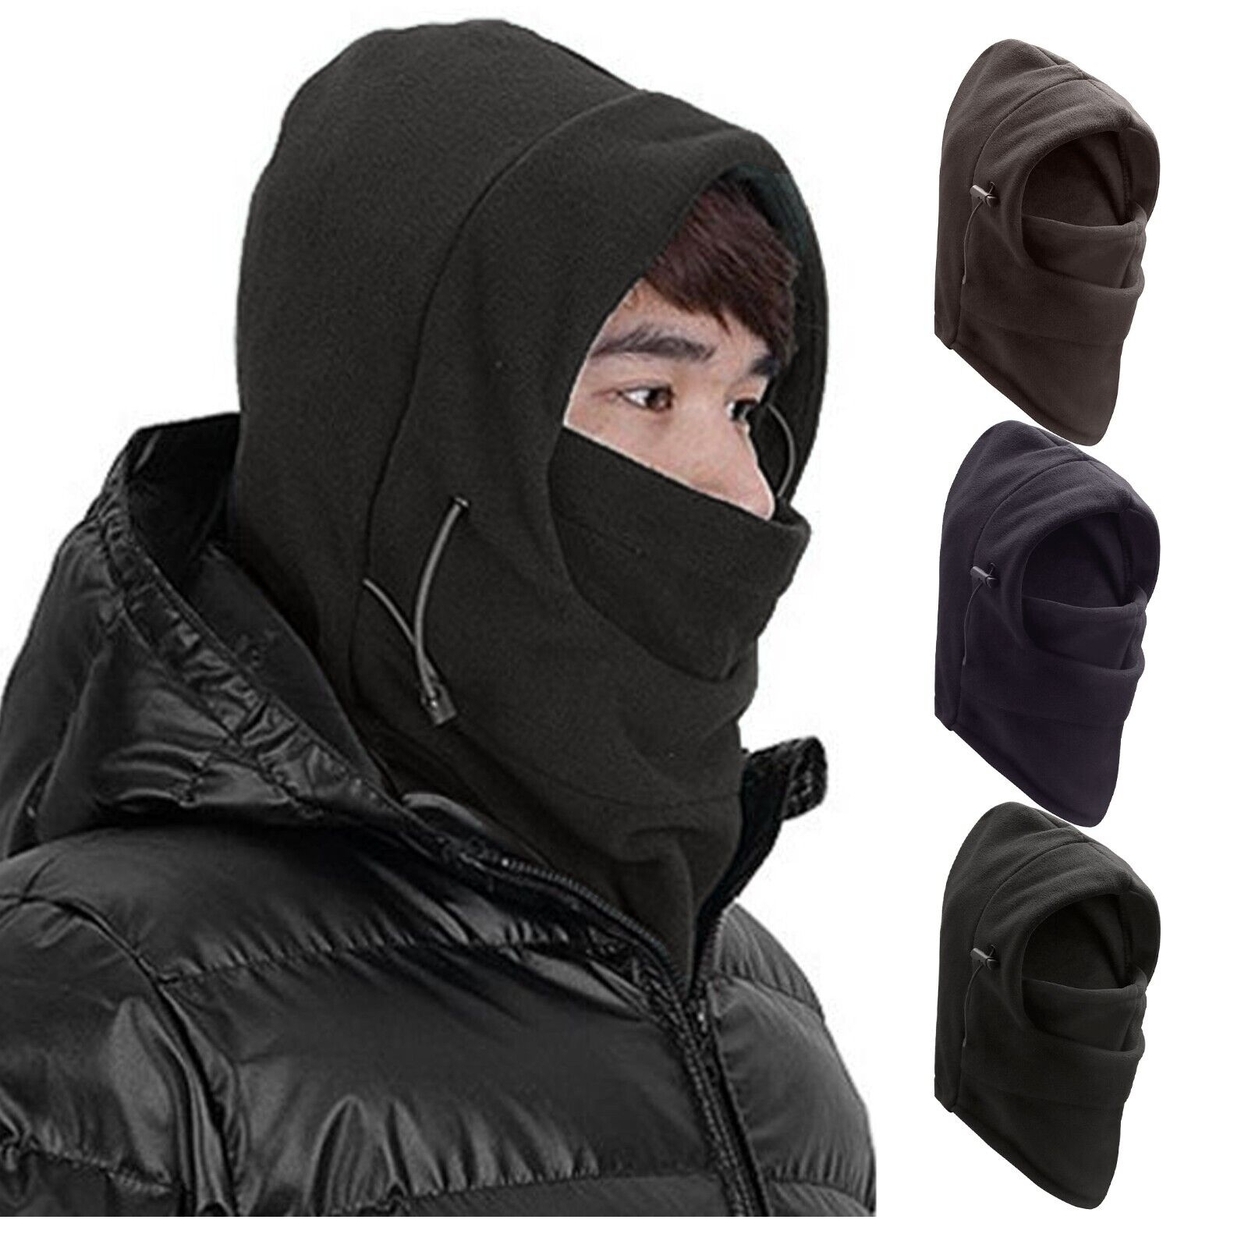 Men's Cozy Ultra Soft Warm Fleece Lined Windproof Balaclava Thermal Ski Face Mask - Brown